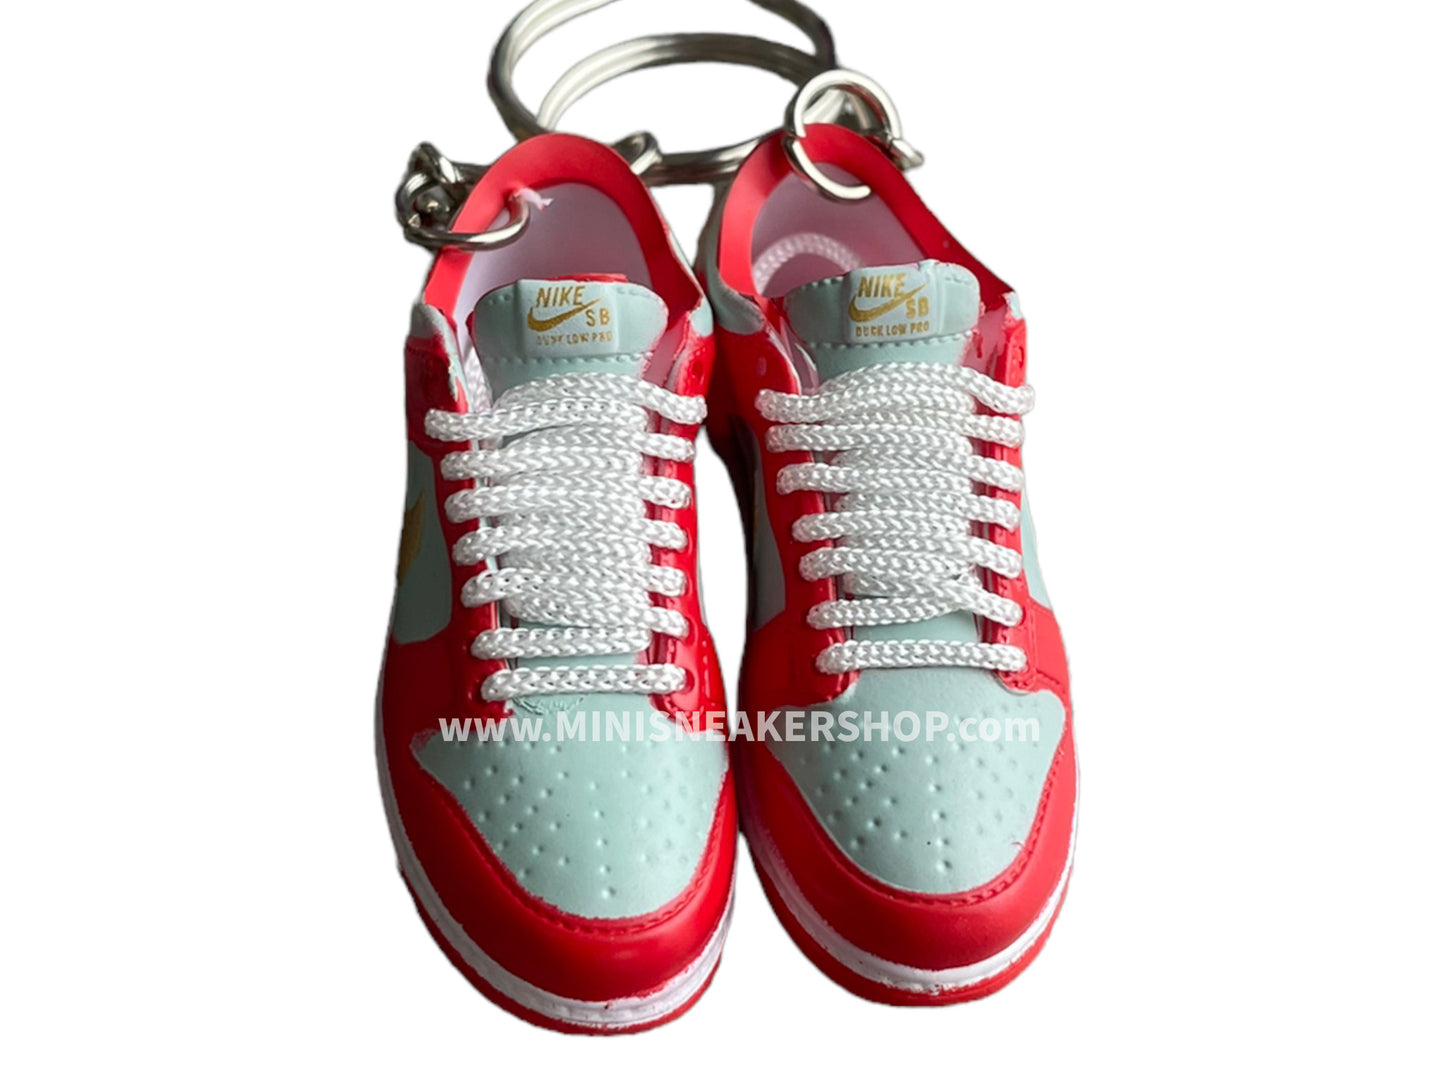 Mini sneaker keychain 3D Dunk - Pastel Blue Red